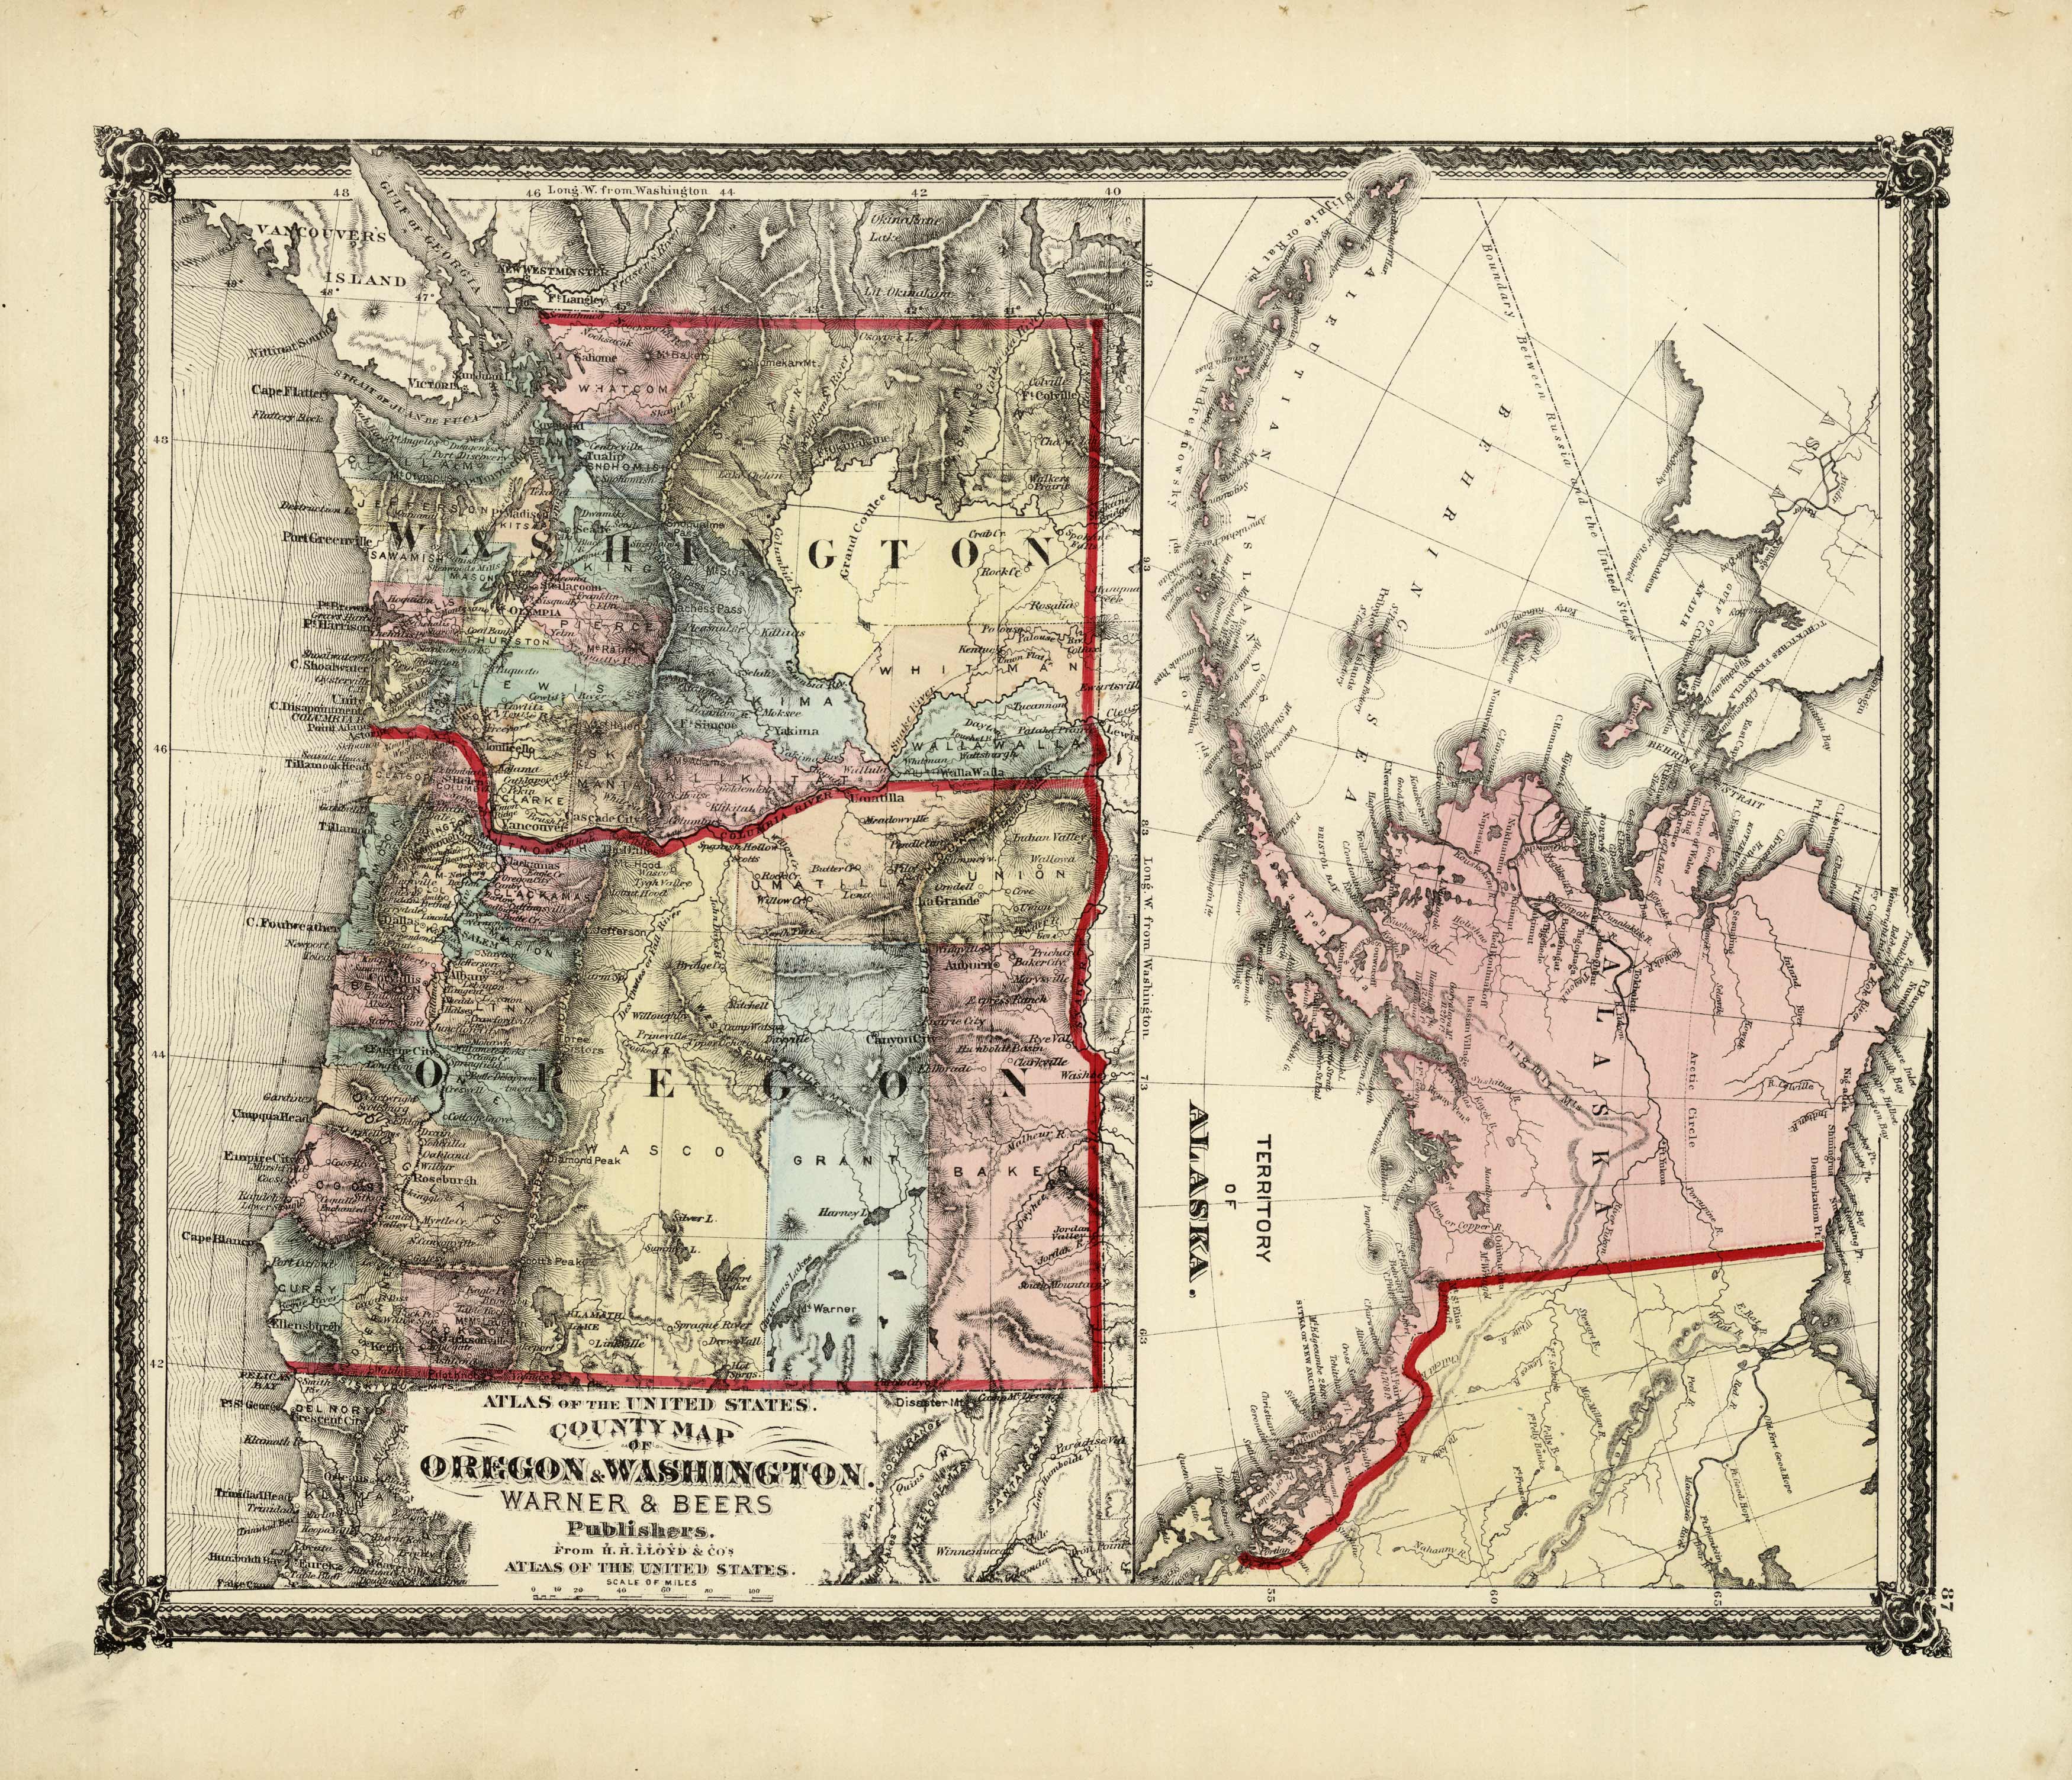 County Map of Oregon and Washington/Territory of Alaska